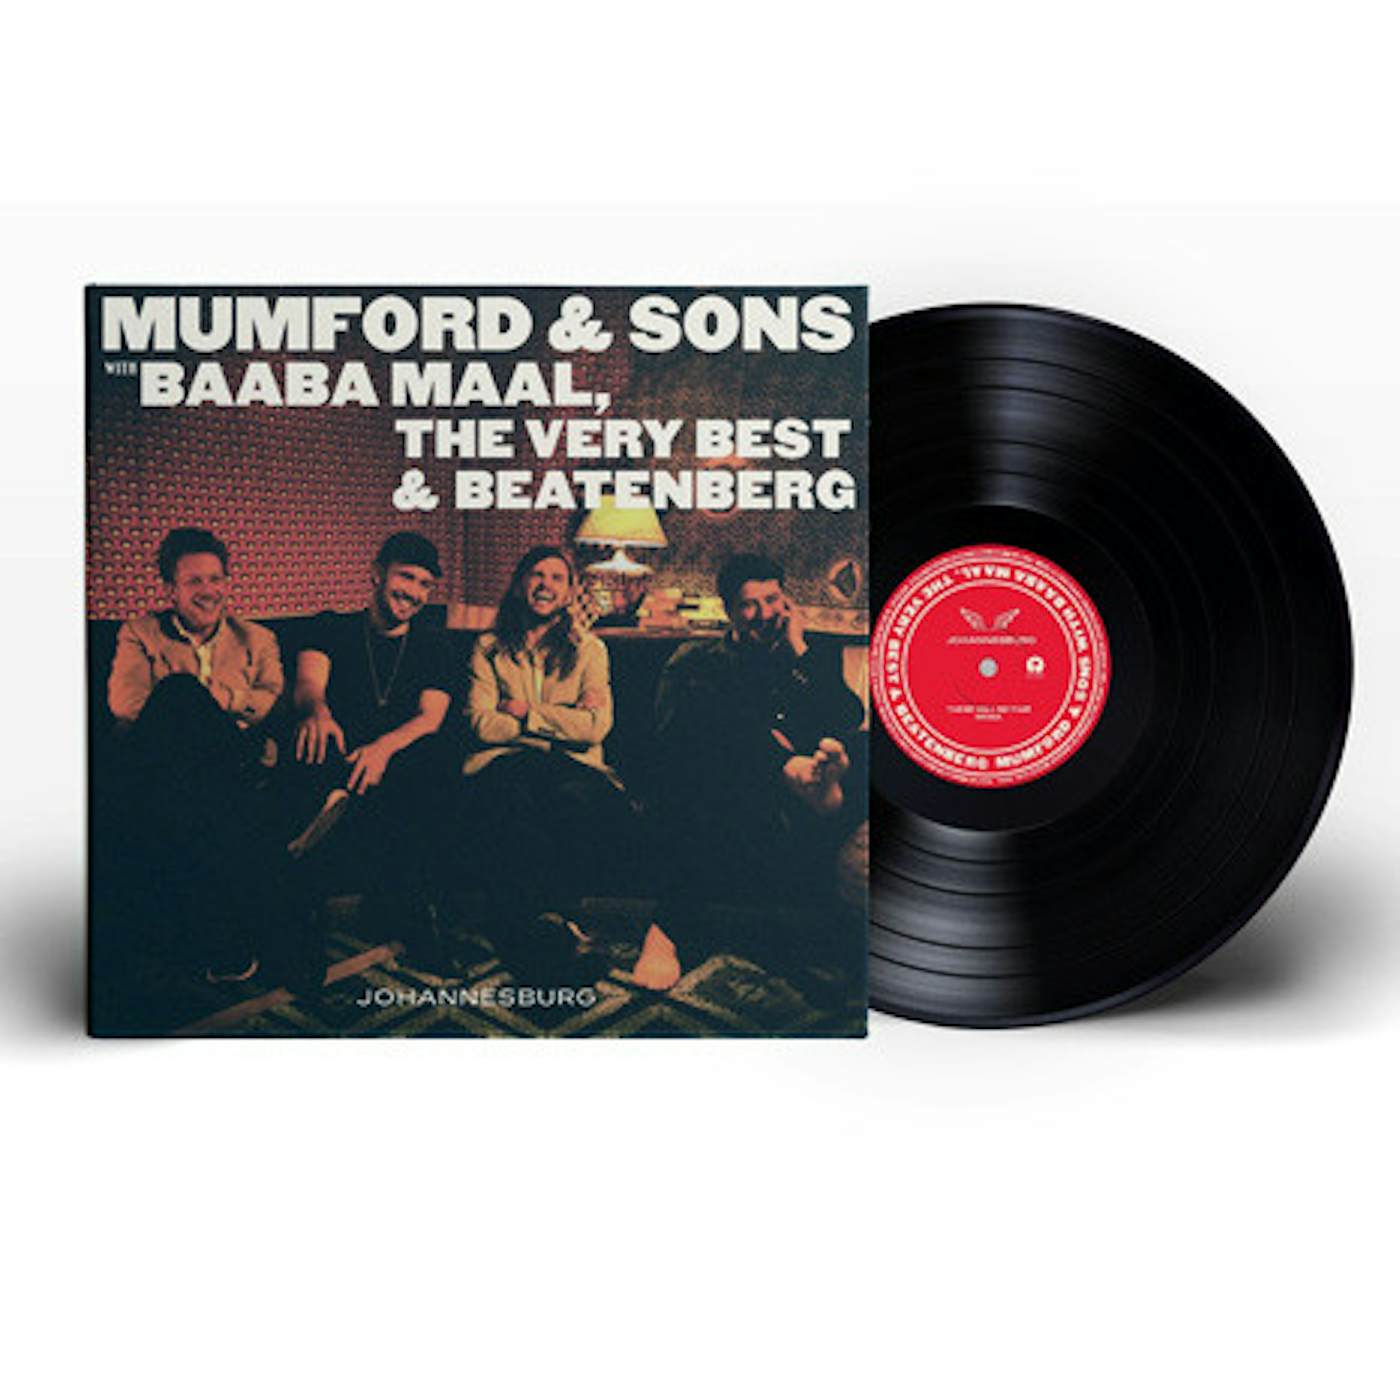 Mumford & Sons Johannesburg Vinyl Record